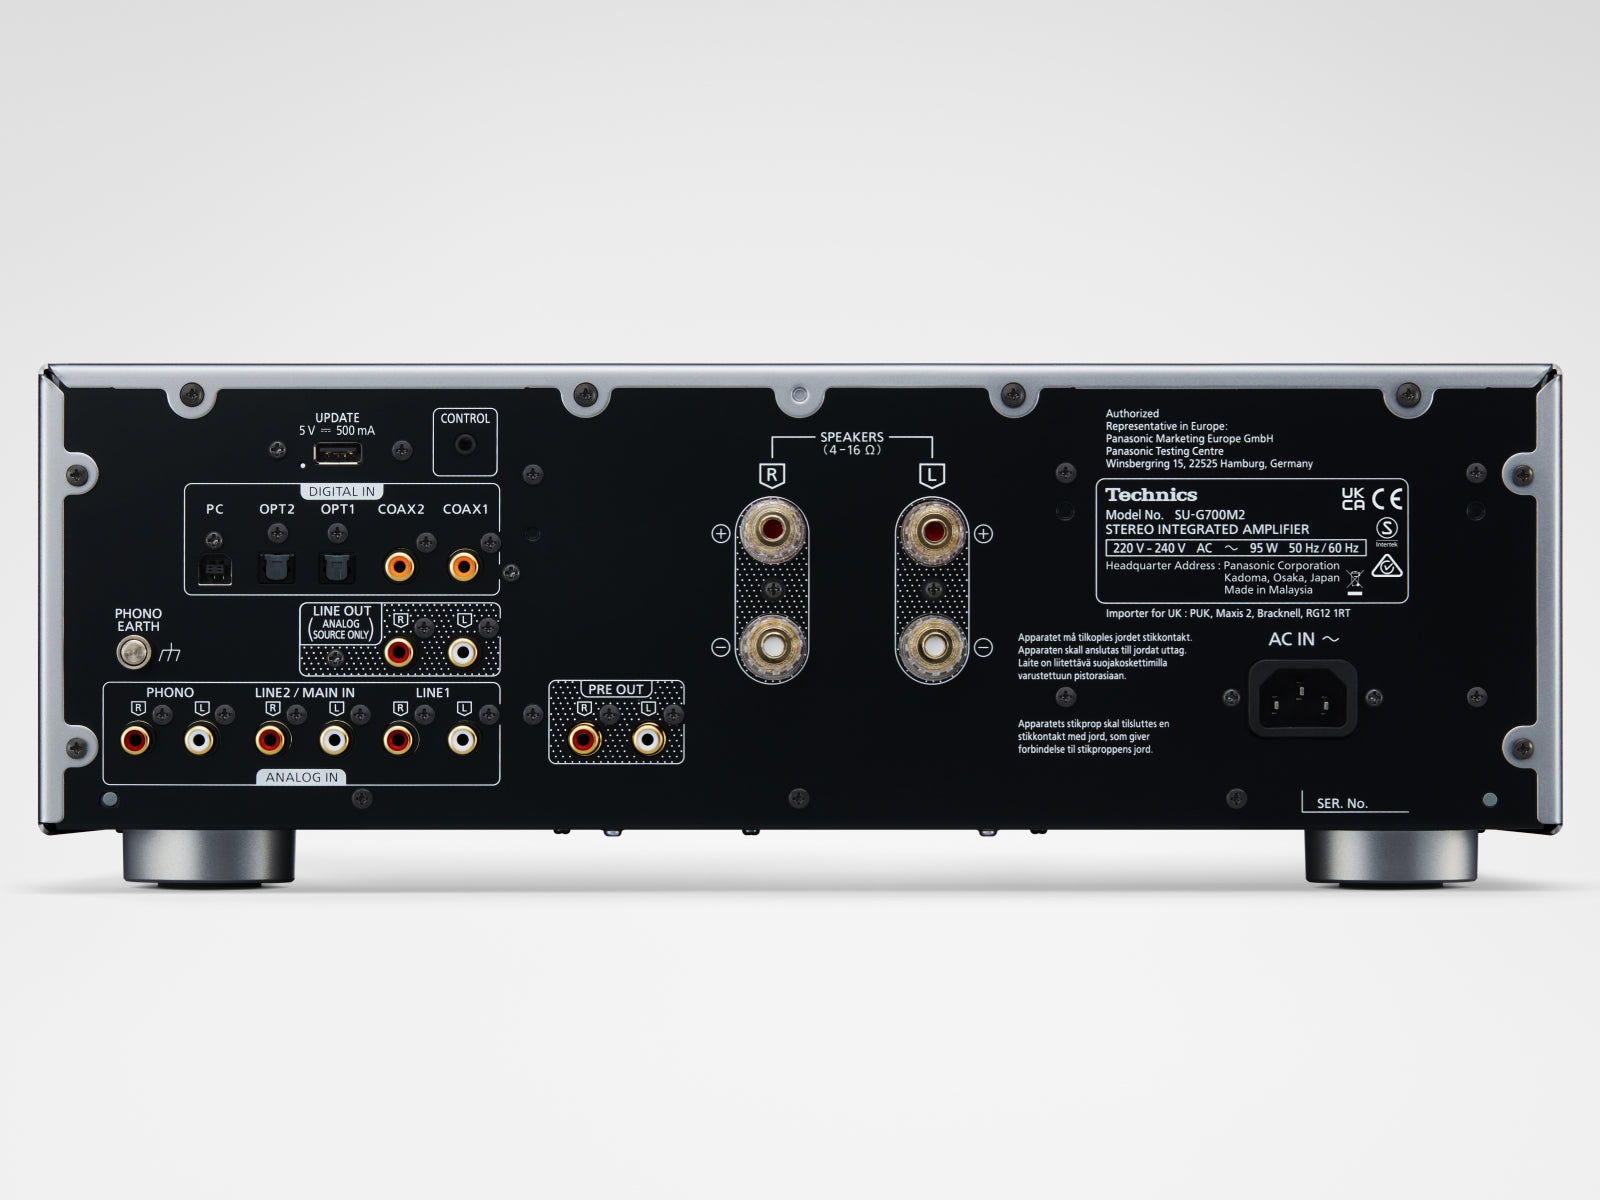 Technics SU-G700M2 & SL-G700M2 Amplifier with Network / SACD Player